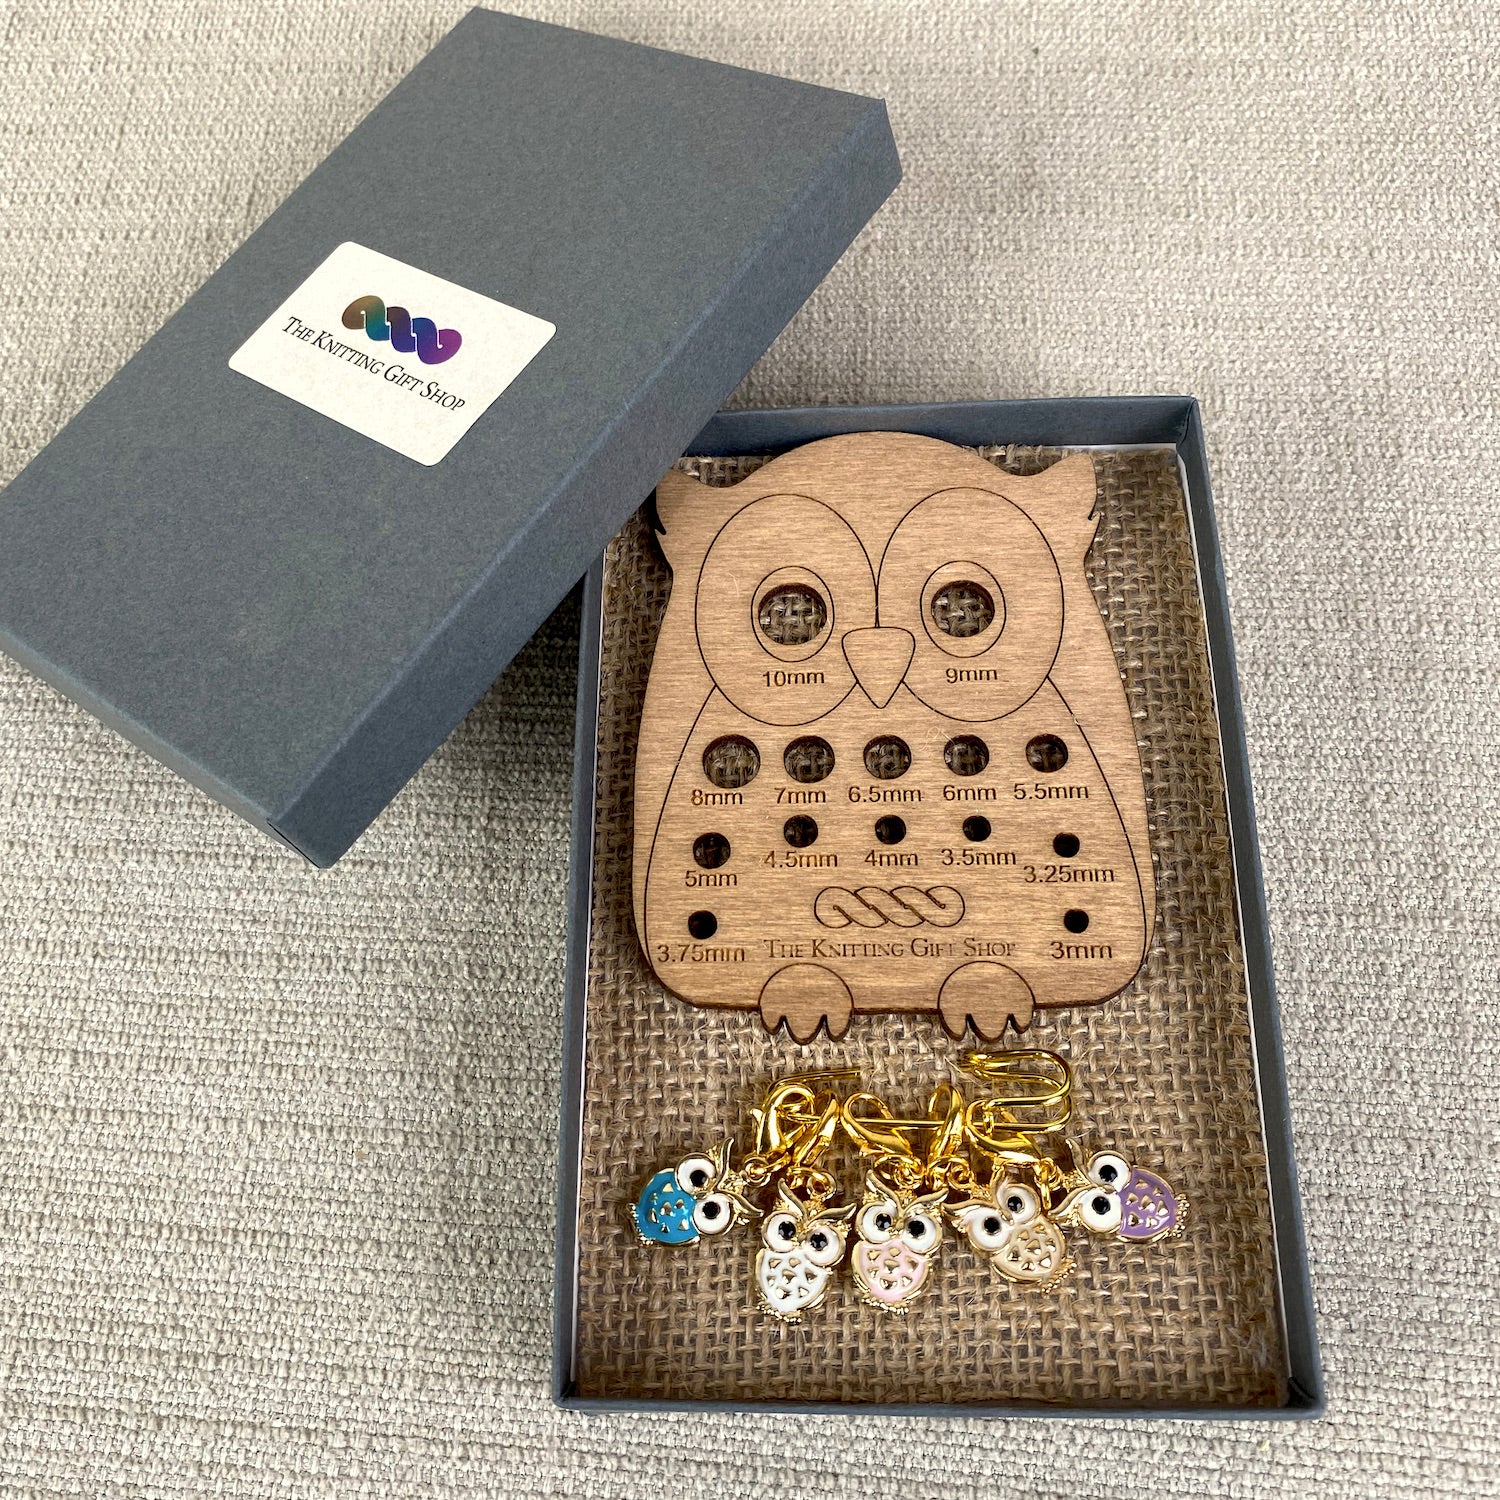 Owl Knitting Needle Gauge and Stitch Markers Gift Set